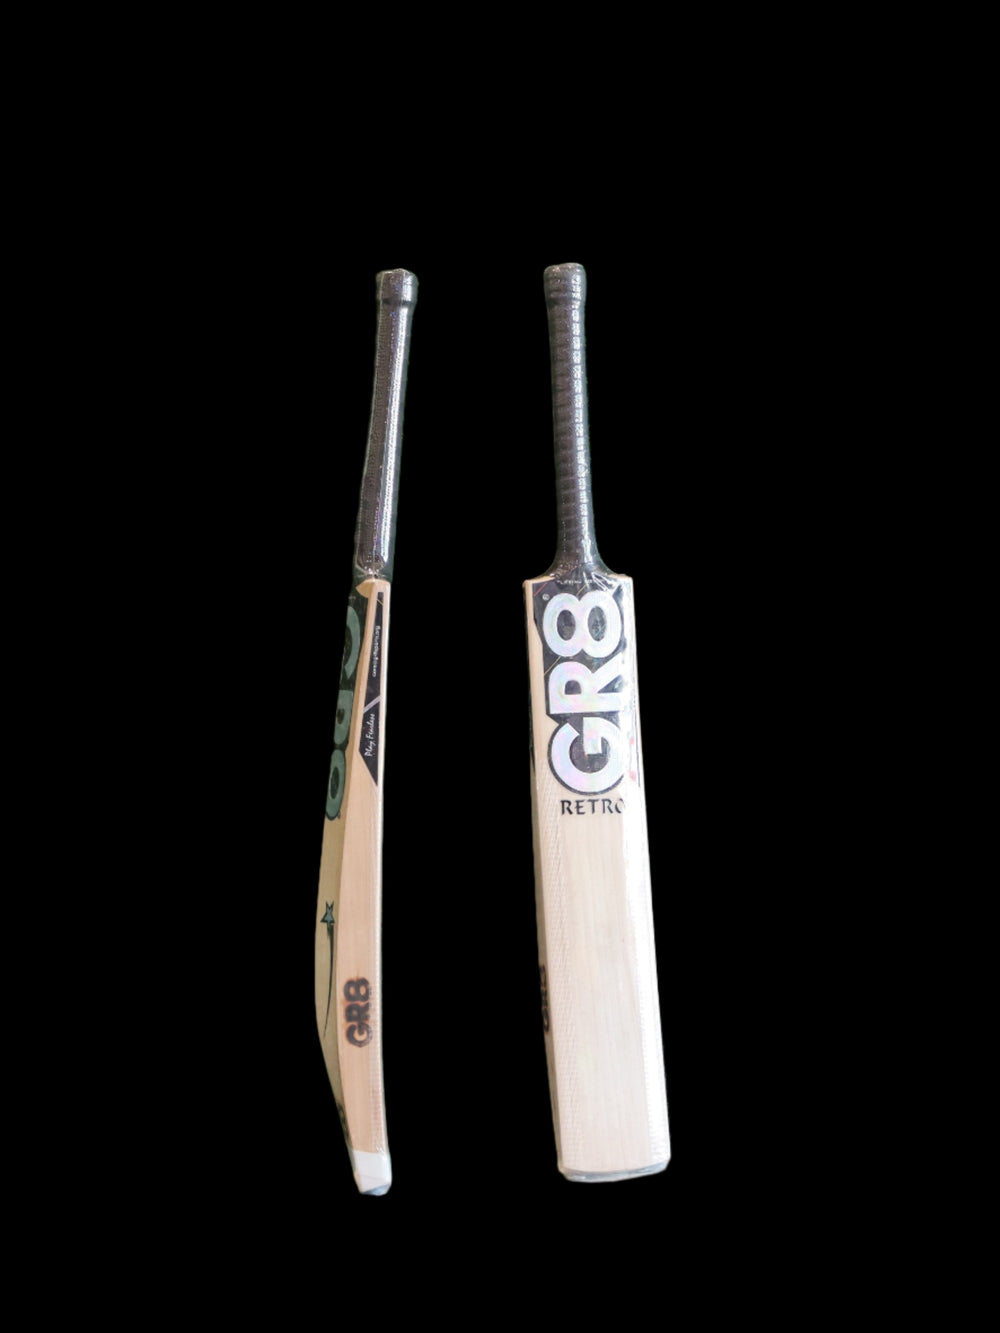 gr8 cricket bat retro editon side profile and front view